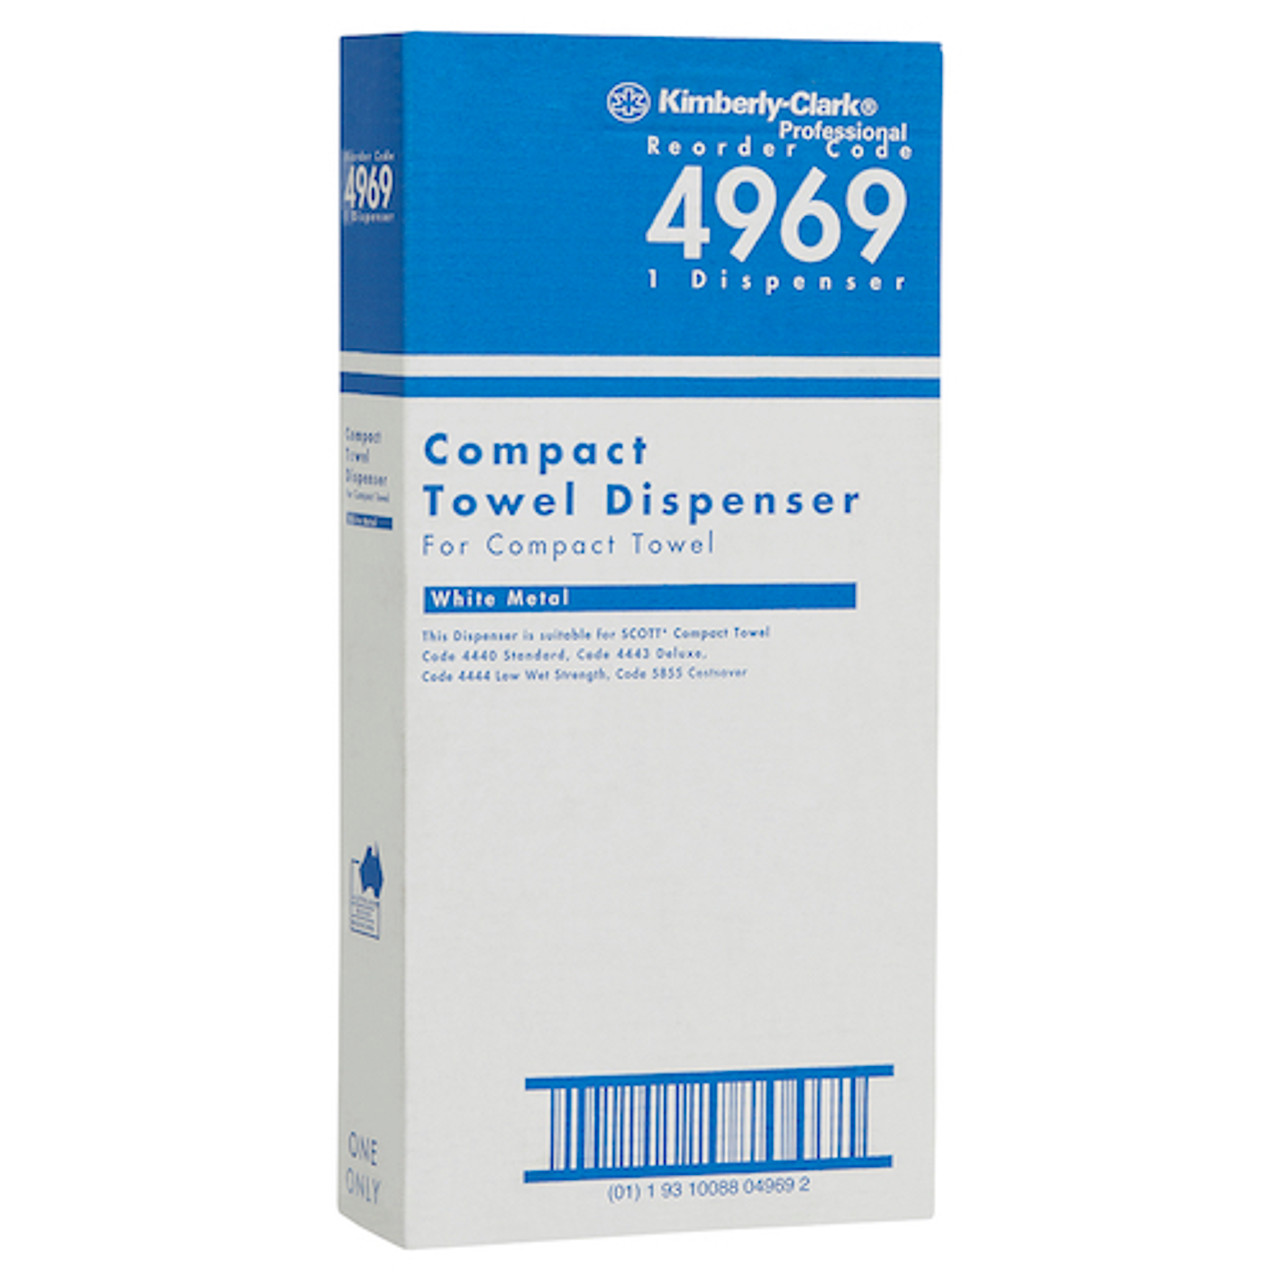 Kimberly Clark Compact White Metal Dispenser (4969)
Kimberly Clark Professional